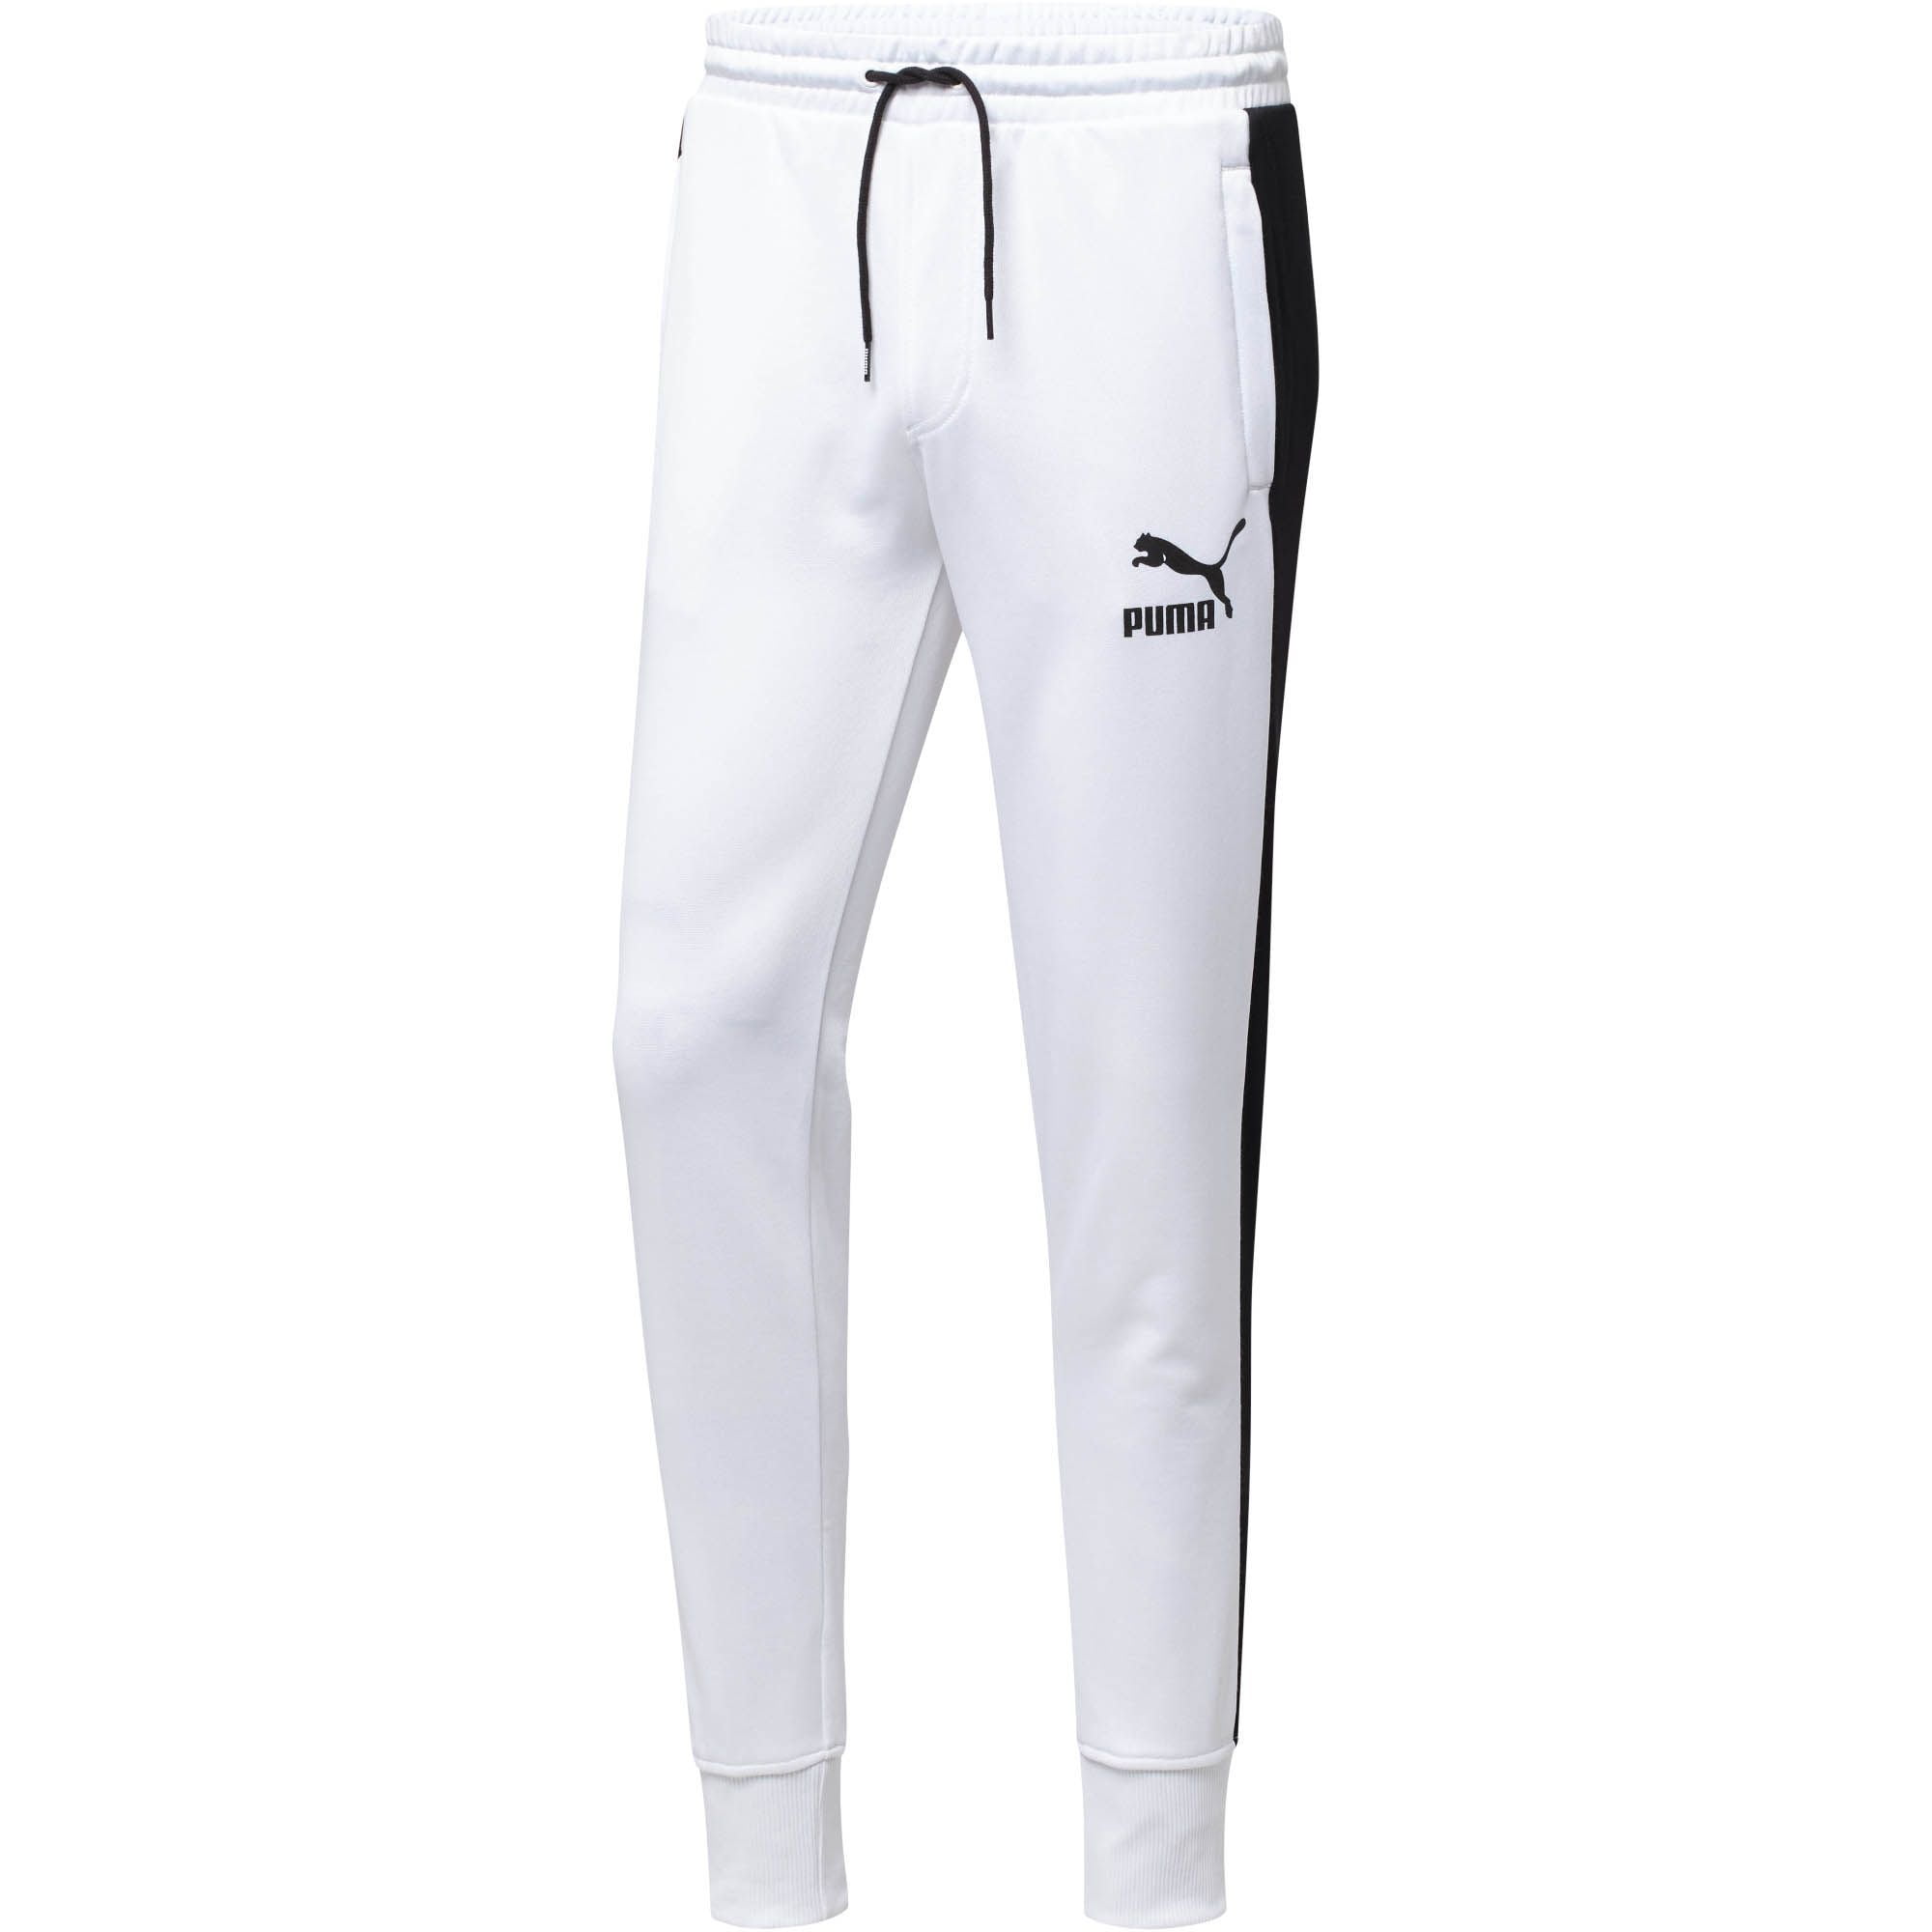 Puma T7 Archive Men's Athletic Fashion Track Pants White/Black 572657-42 - Walmart.com